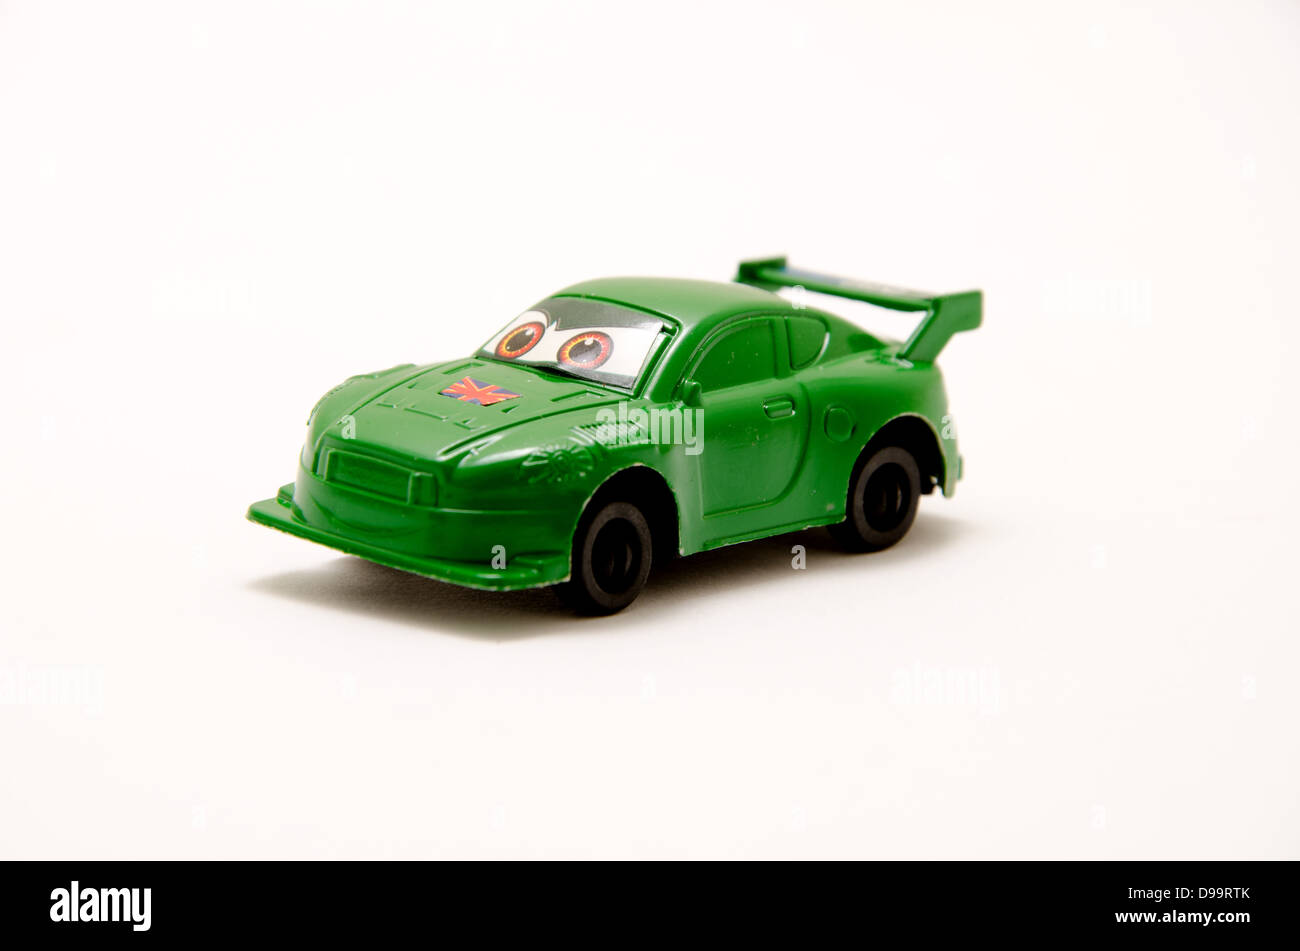 Toy car Stock Photo